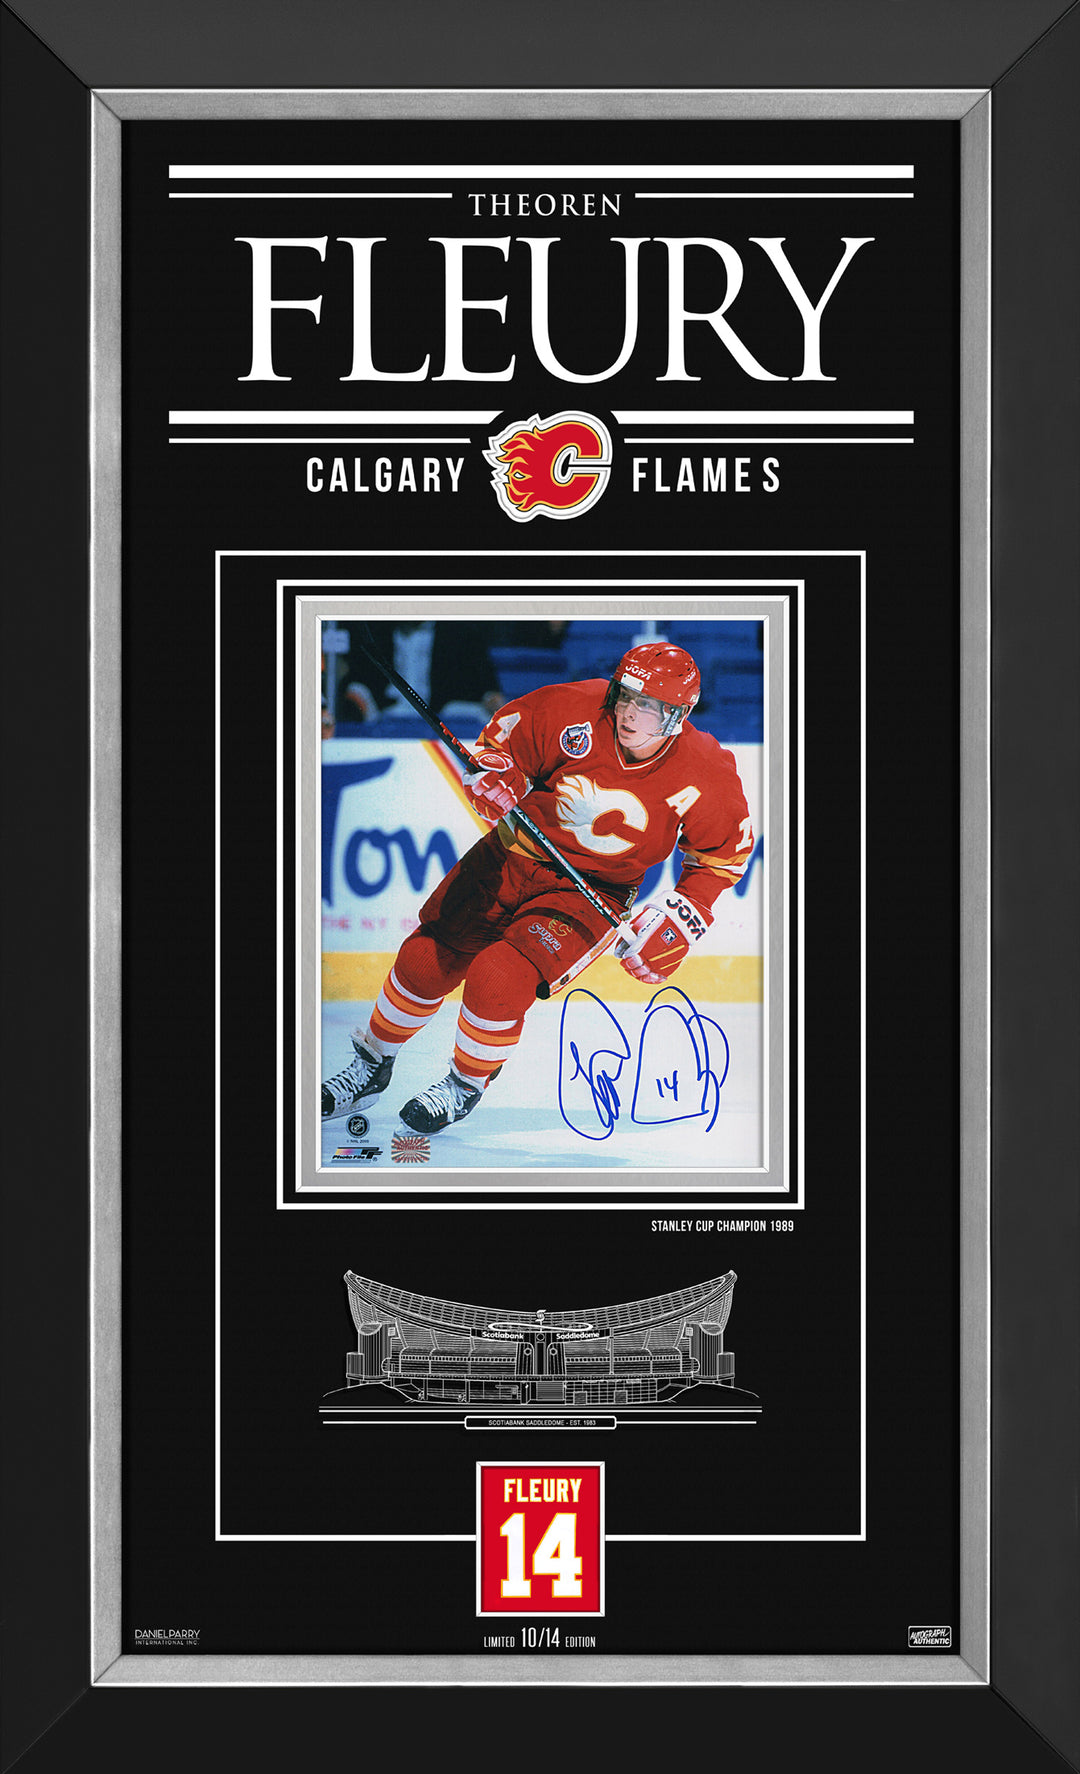 Theoren Fleury Signed Photo Ltd Ed Of 14 Calgary Flames, Calgary Flames, NHL, Hockey, Autographed, Signed, AACMH33025